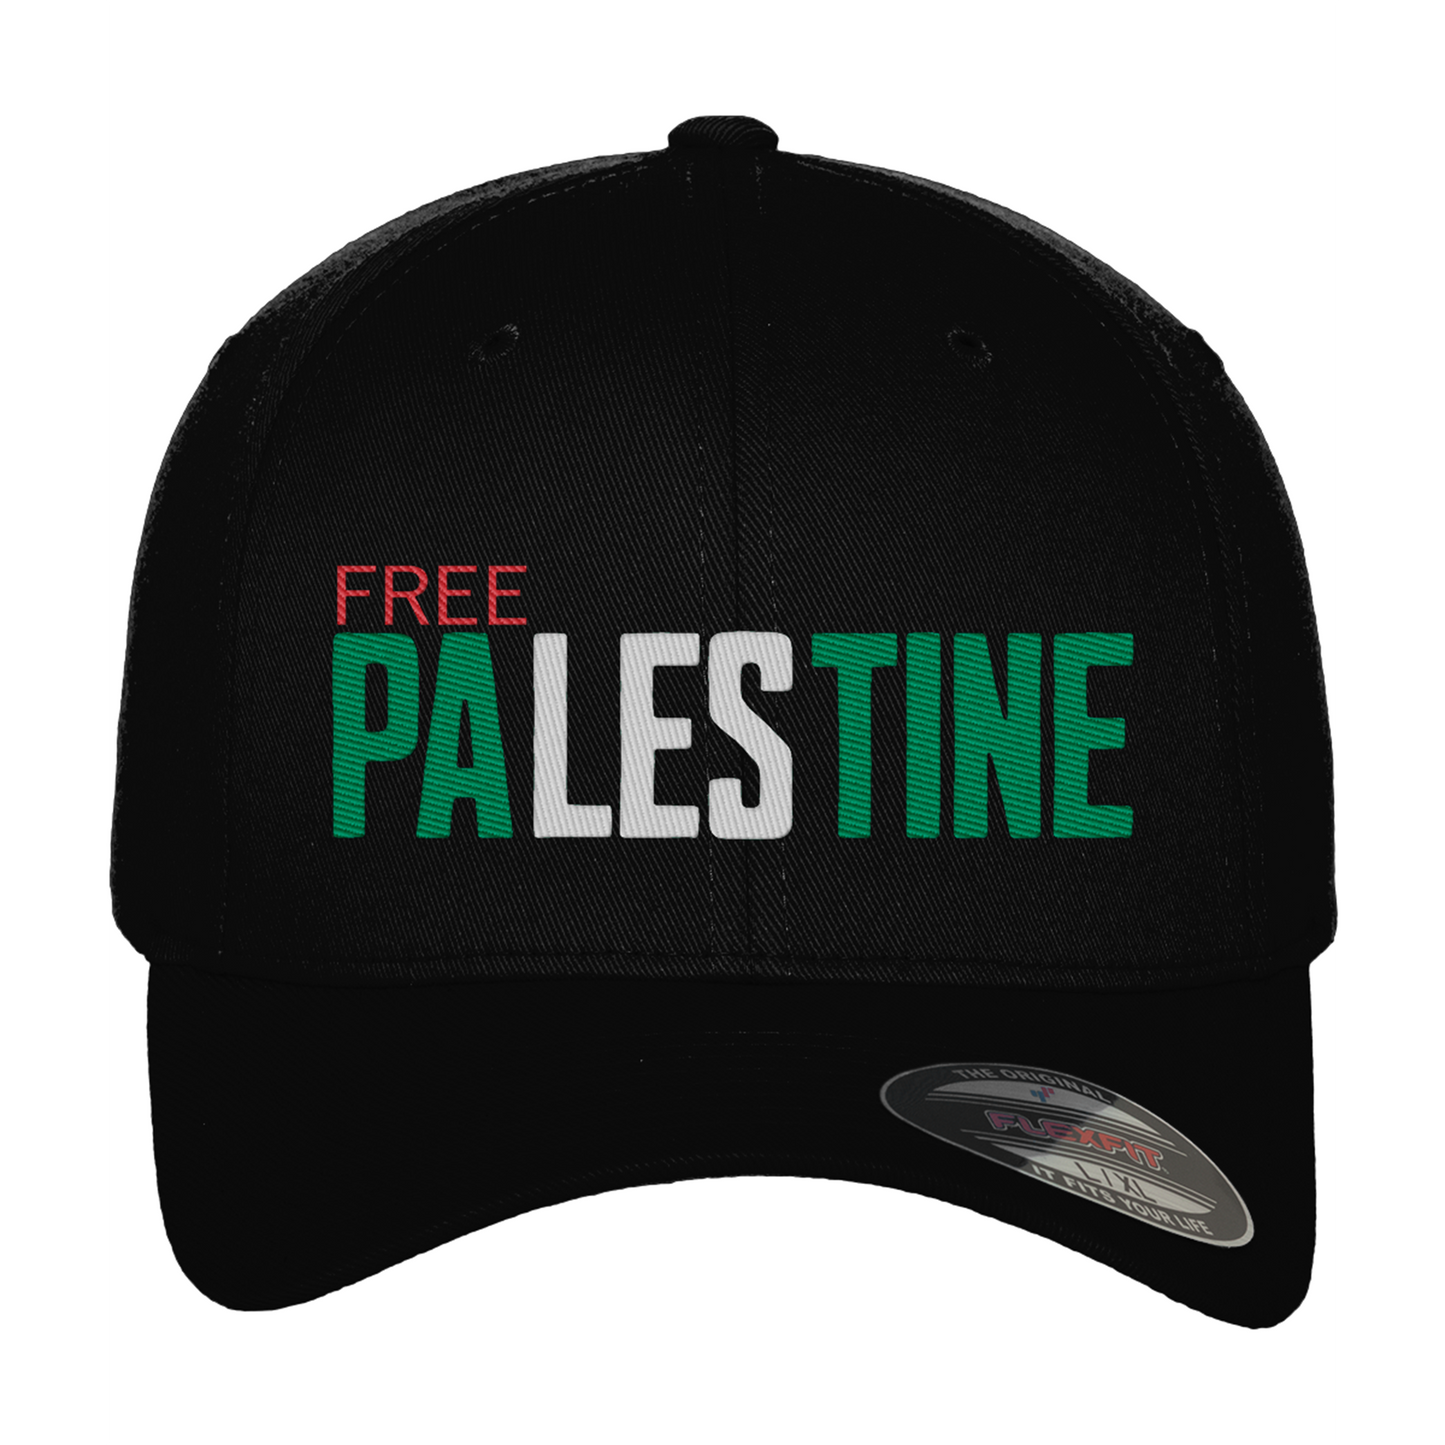 Free Palestine Fitted Premium Quality Baseball Cap